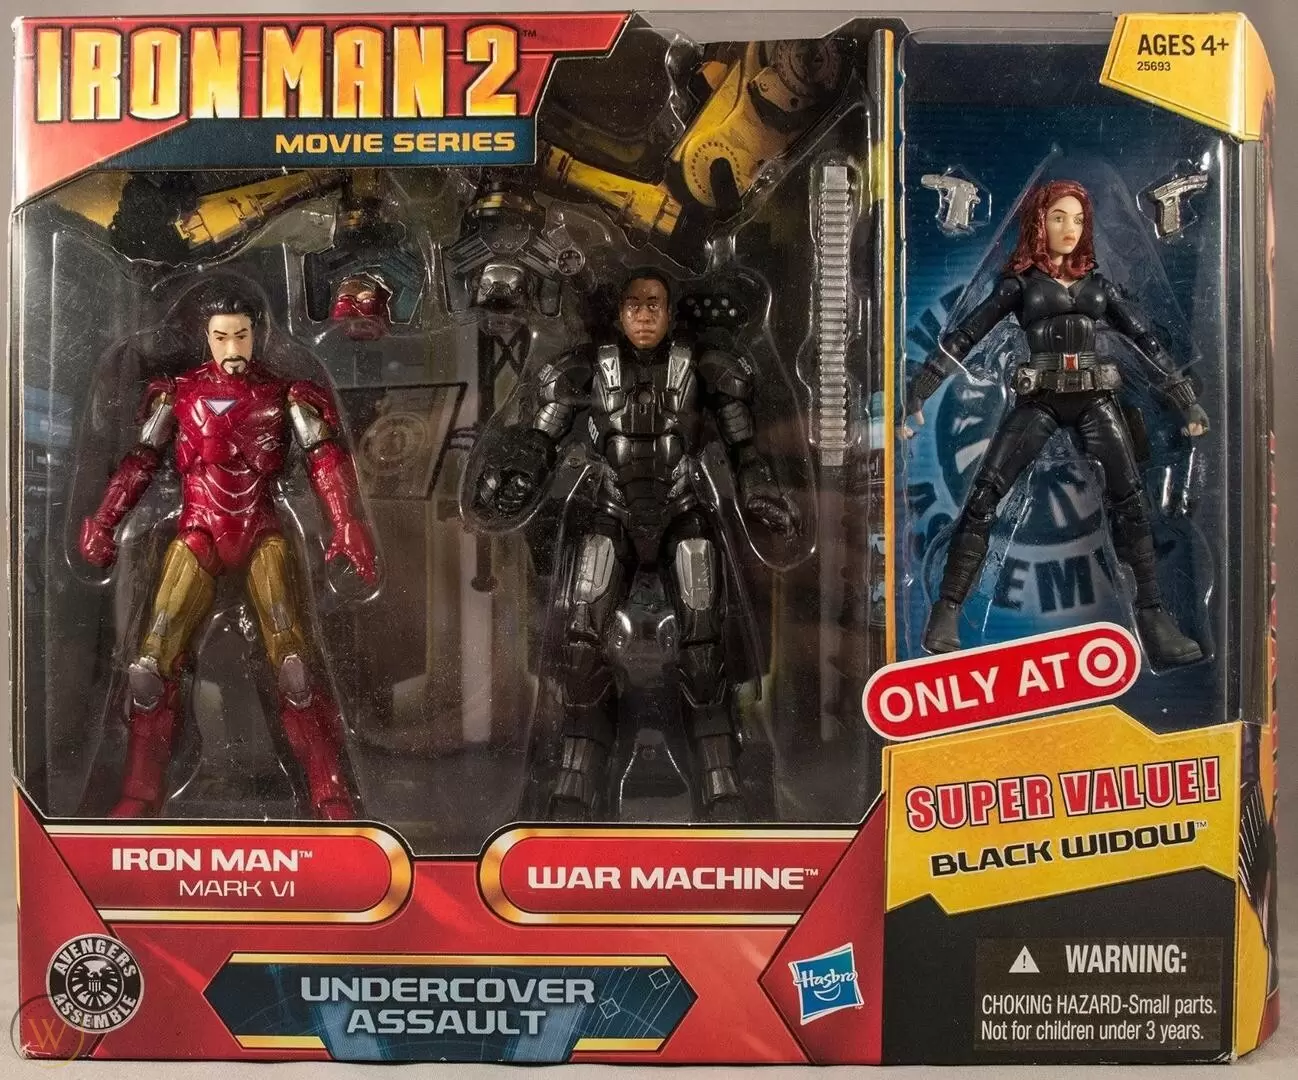 Iron Man 2 - Movie & Comic Series - Undercover Assault 3 Pack